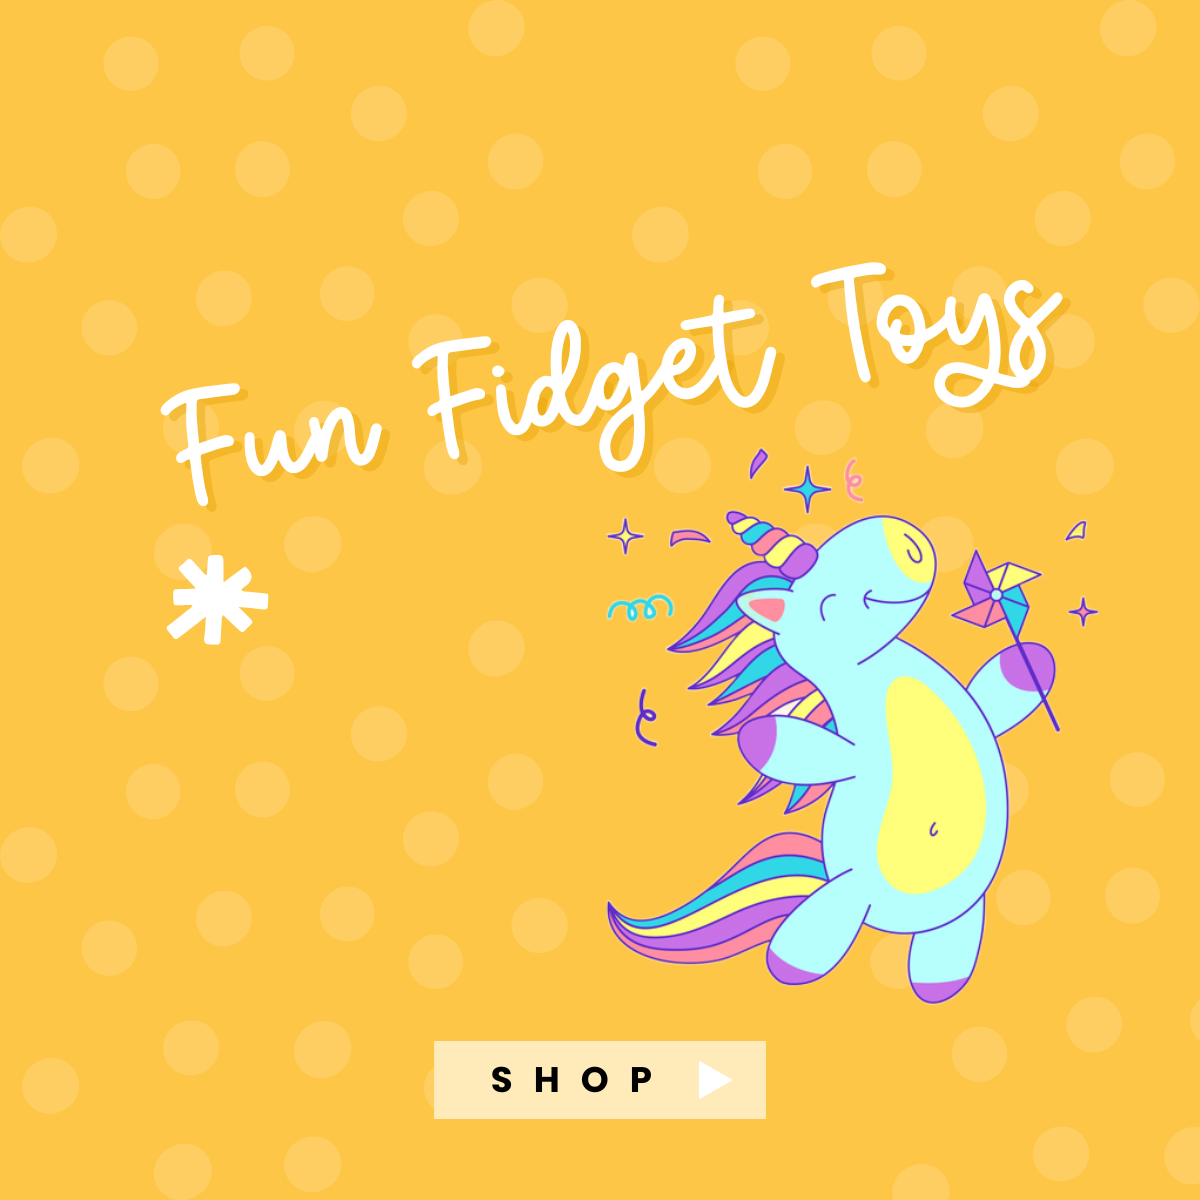 Fun Fidget Toys